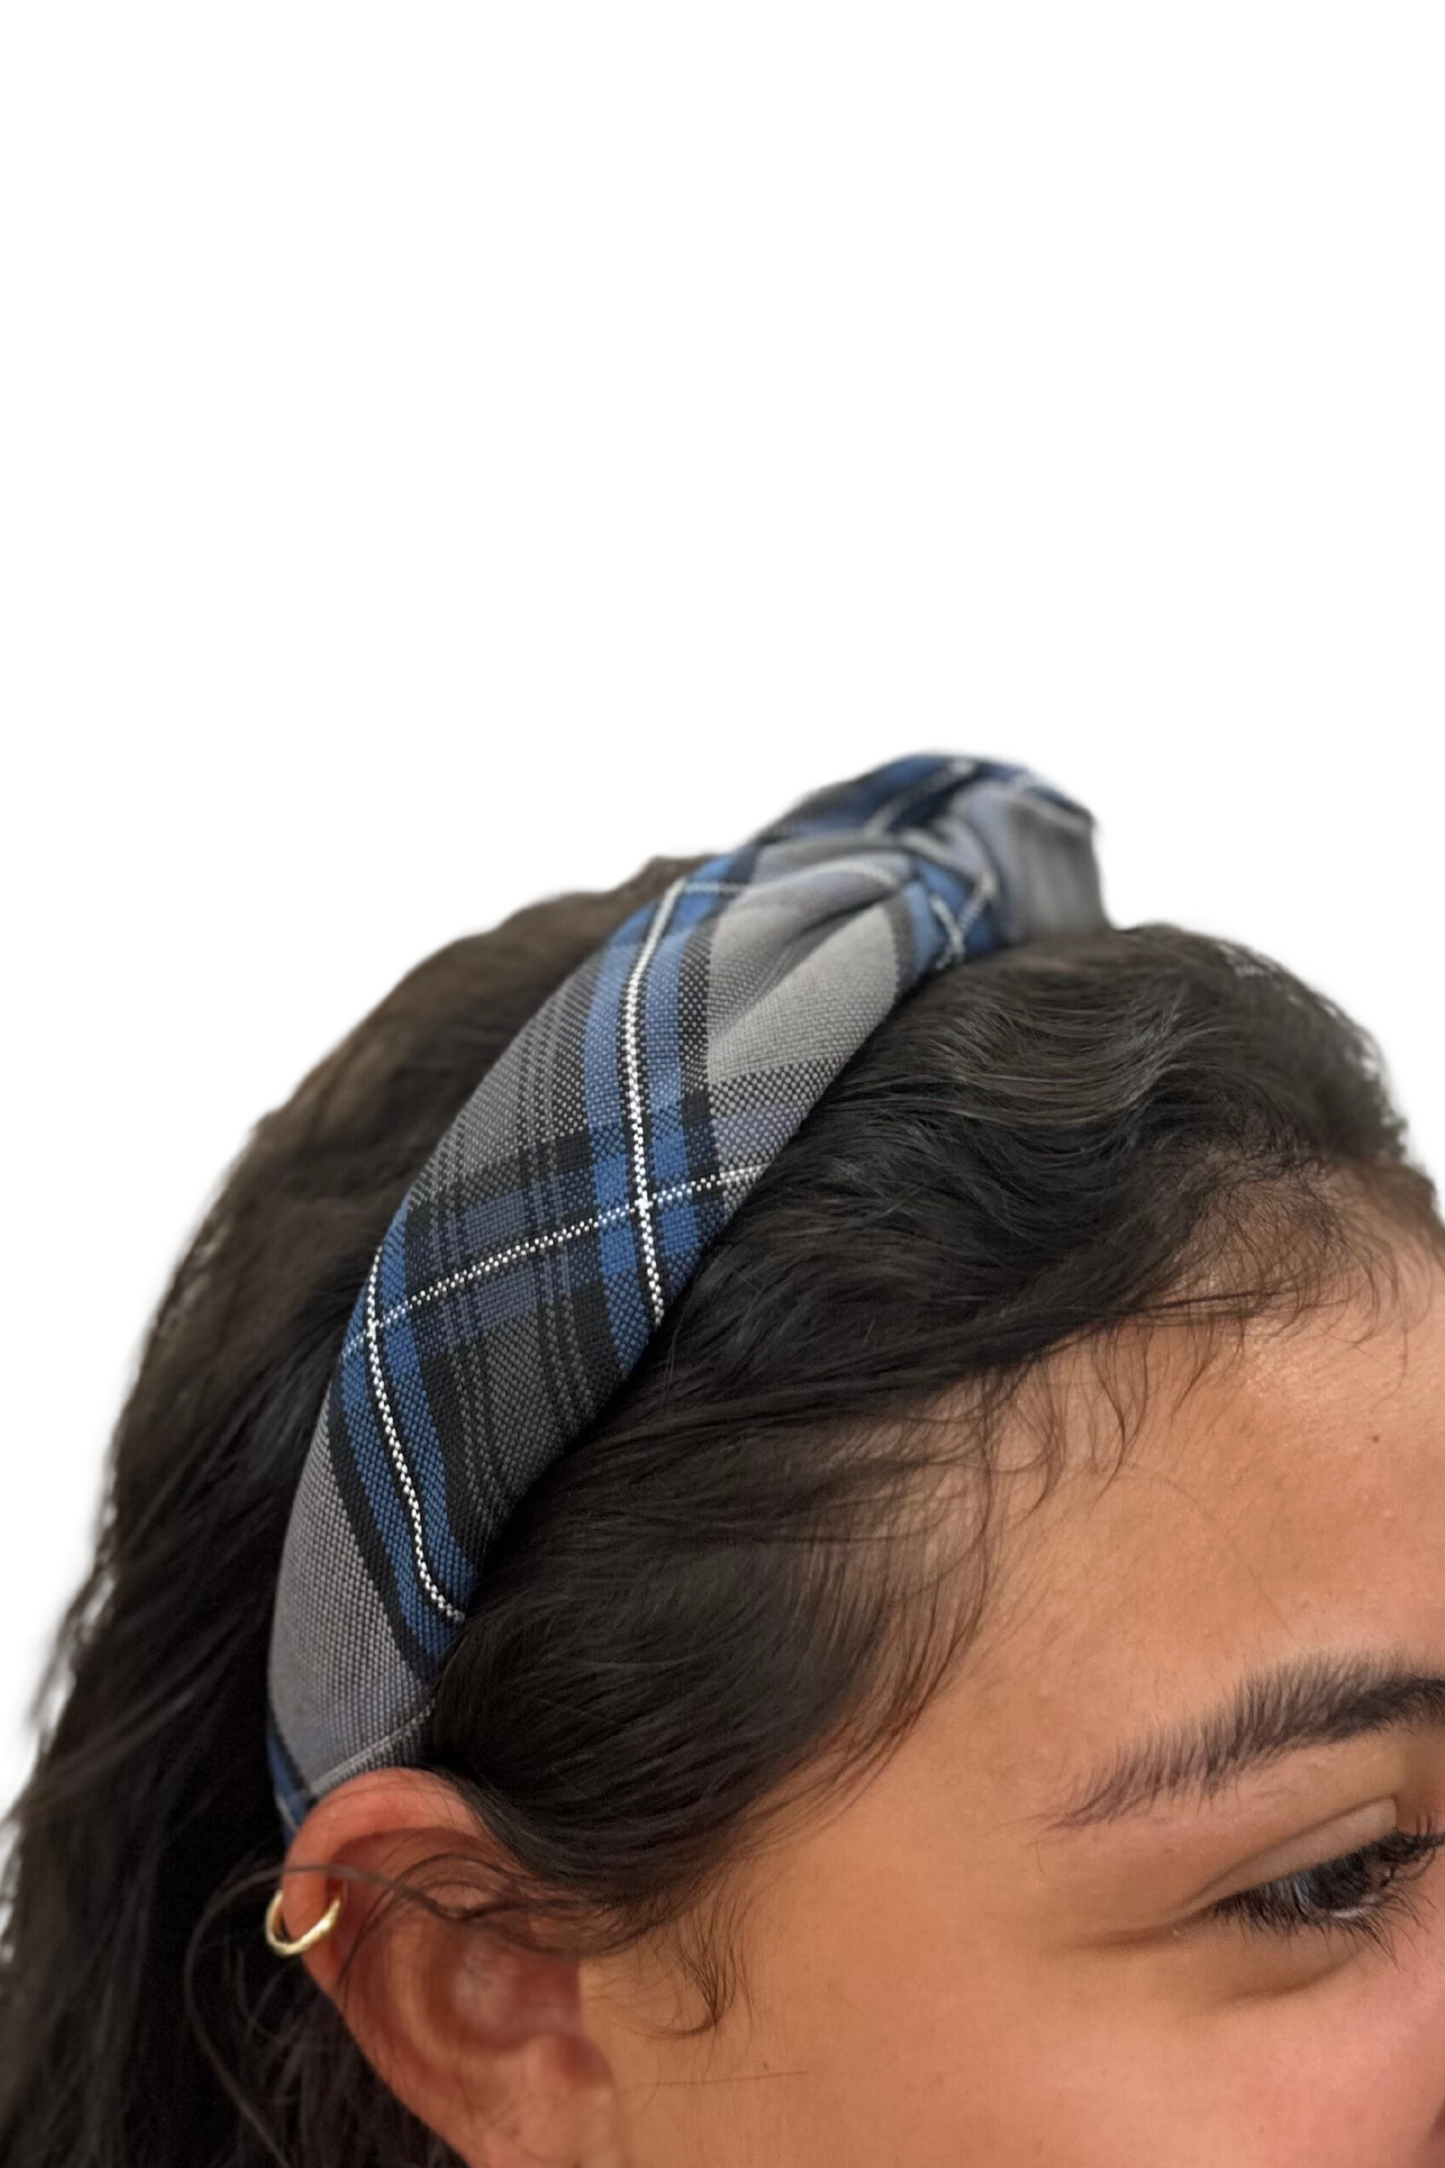 Brainerd Baptist Custom Order Knotted Headband